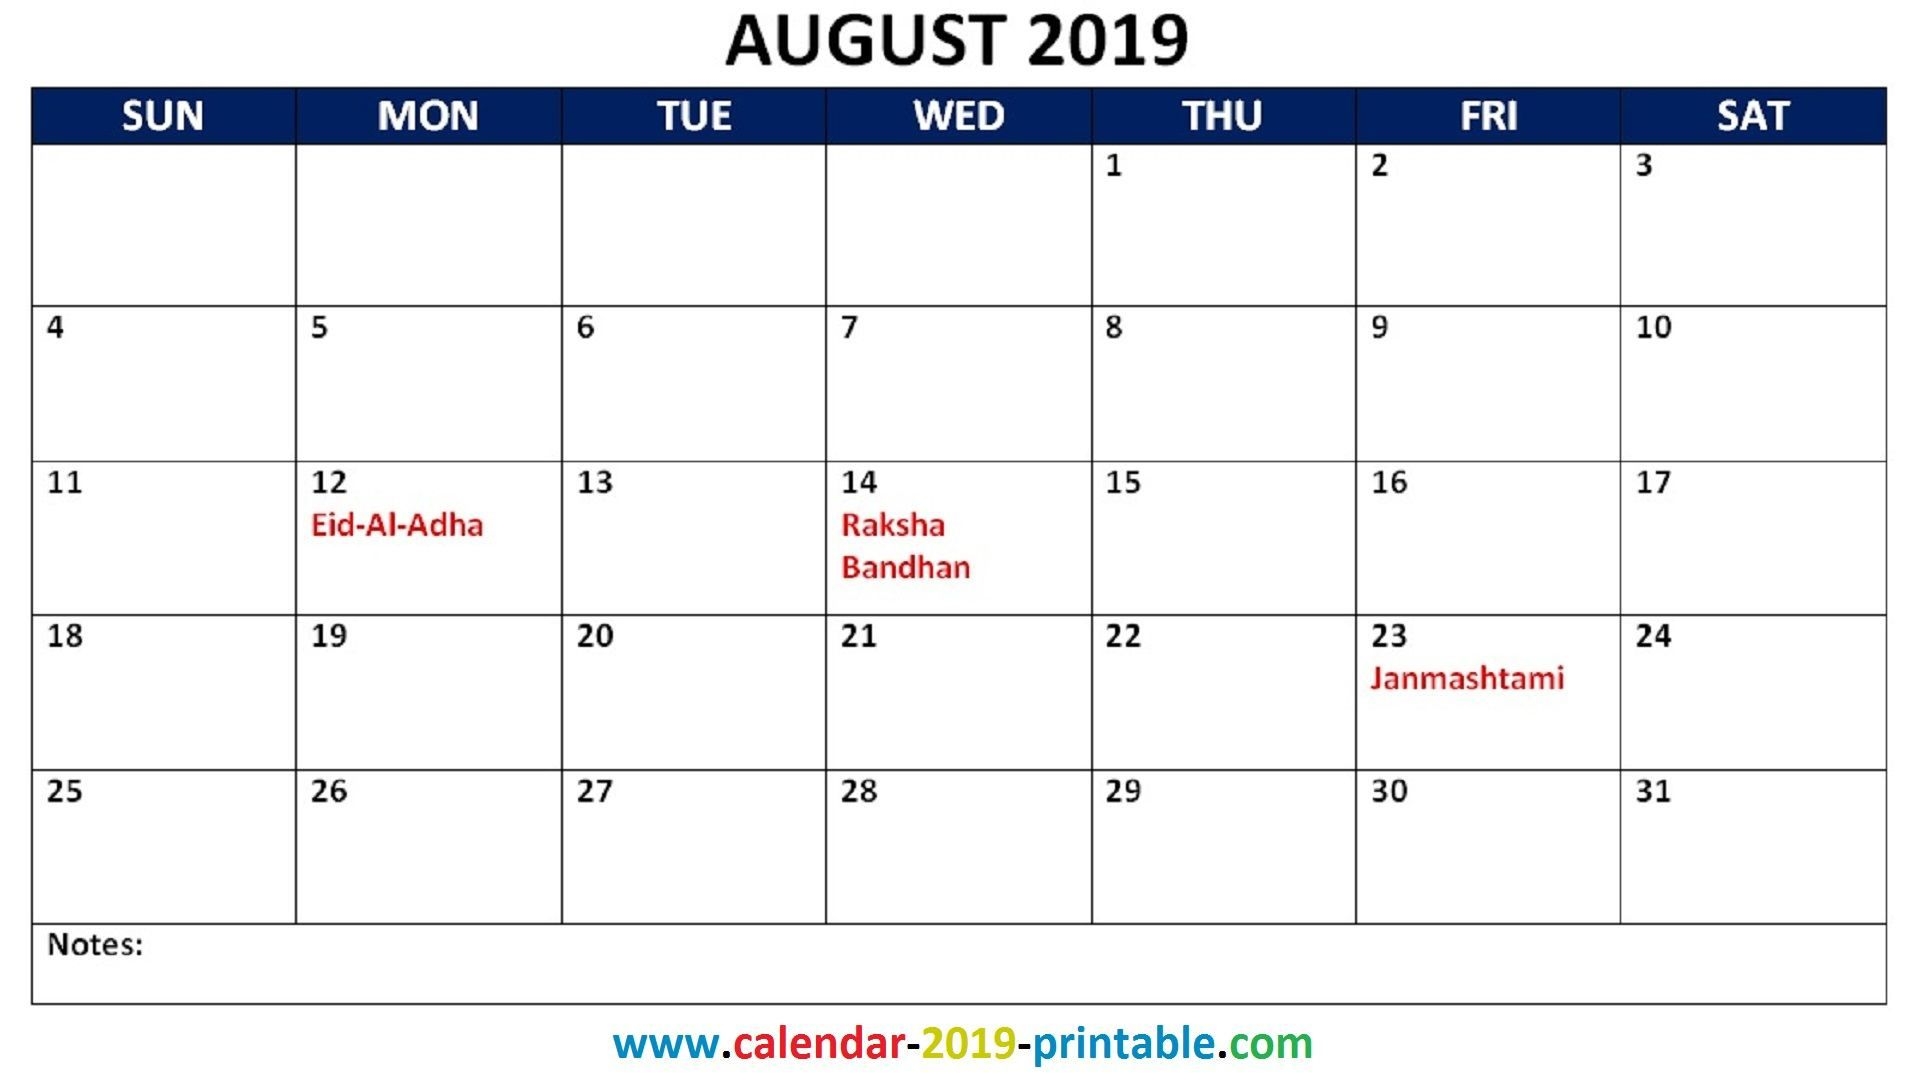 august-2019-calendar-with-holidays-qualads